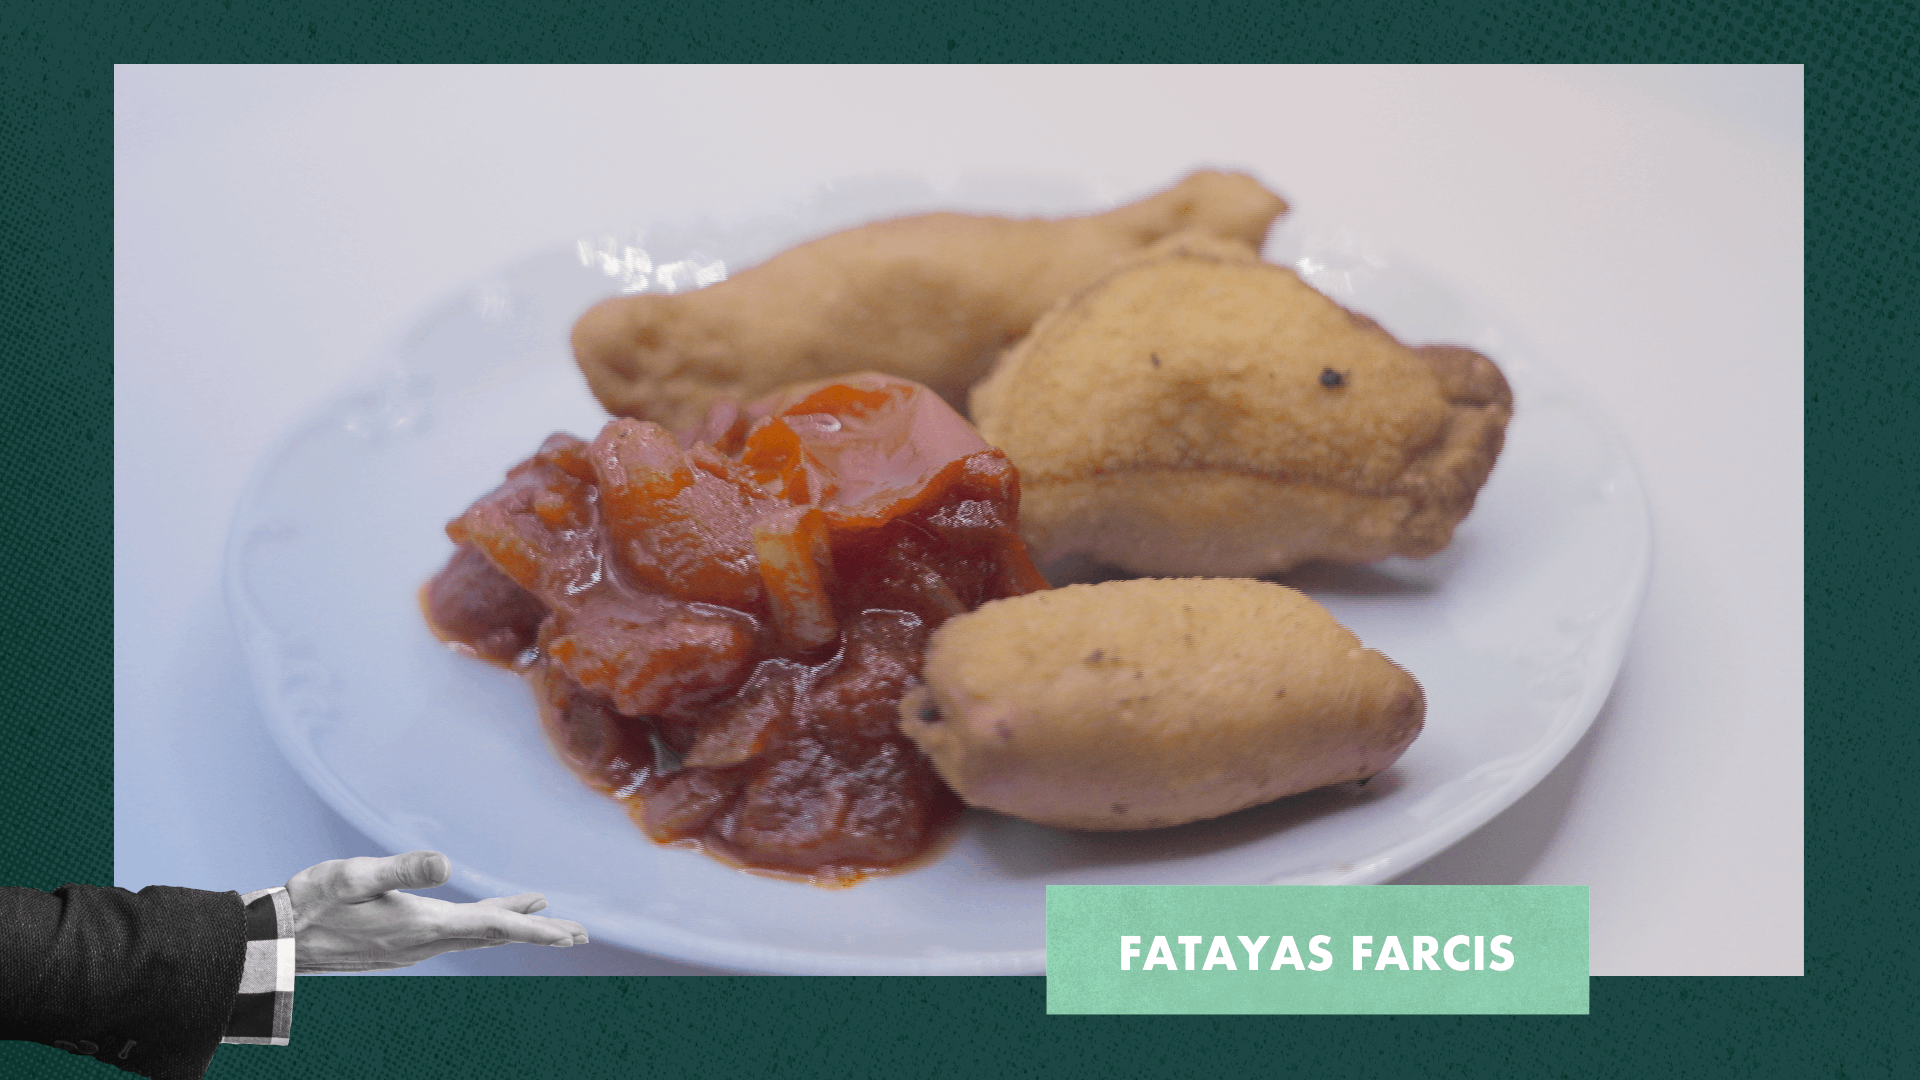 Fatayas farcis